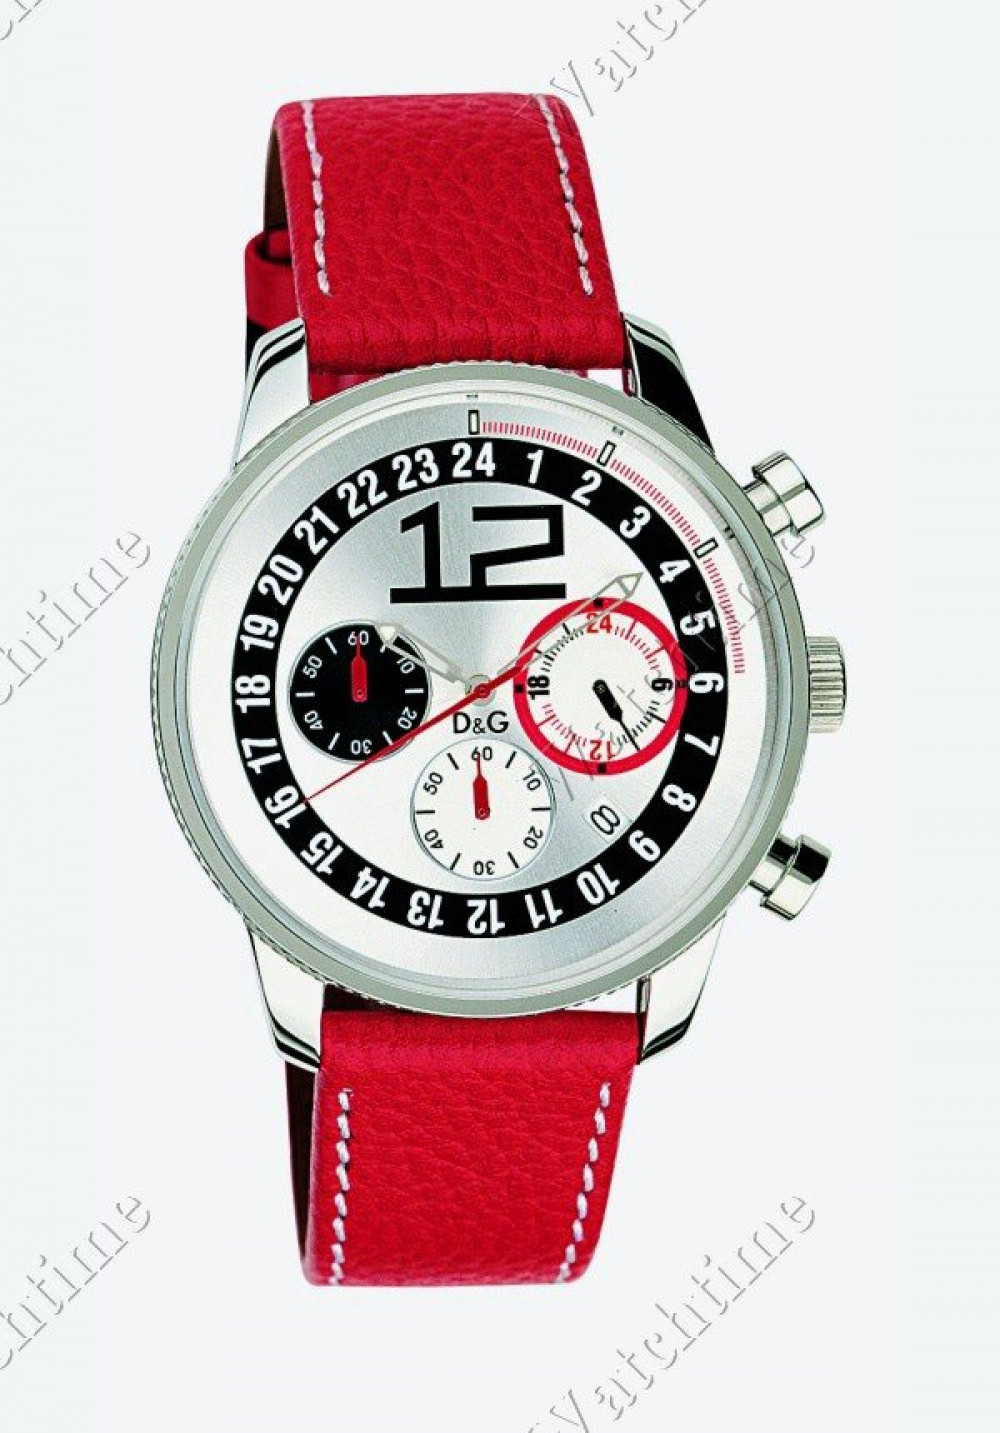 Zegarek firmy D&G Dolce & Gabbana Time, model Advanced-Chrono